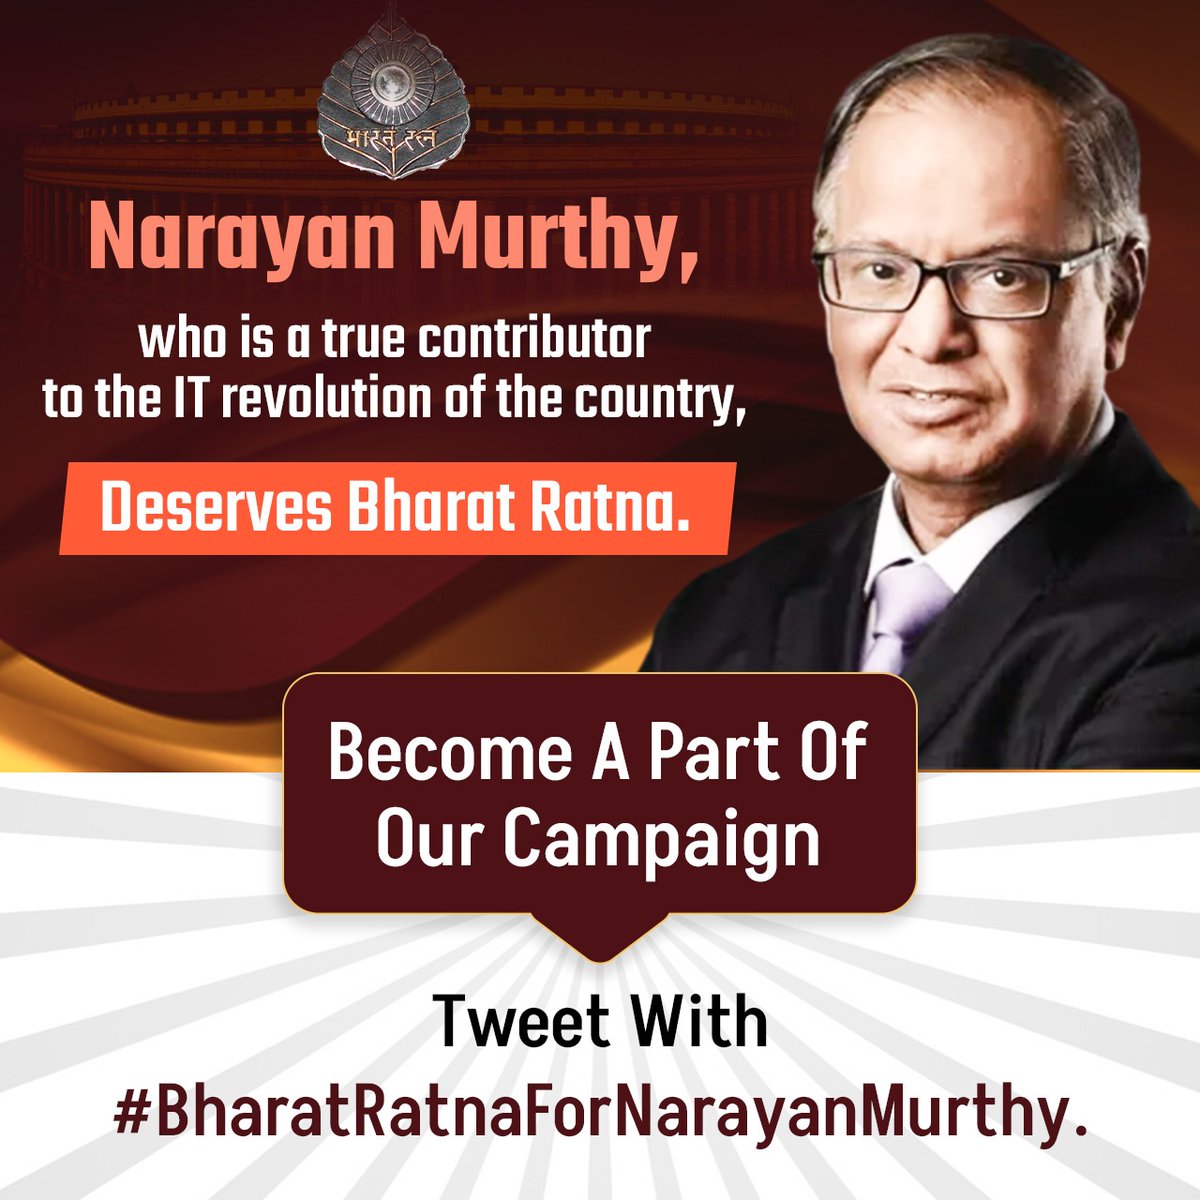 Join us in our campaign to make Shri Narayan Murthy Ji a Bharat Ratna Awardee

Tweet using hashtag #RequestByDrVivekBindra #BharatRatnaForNarayanMurthy